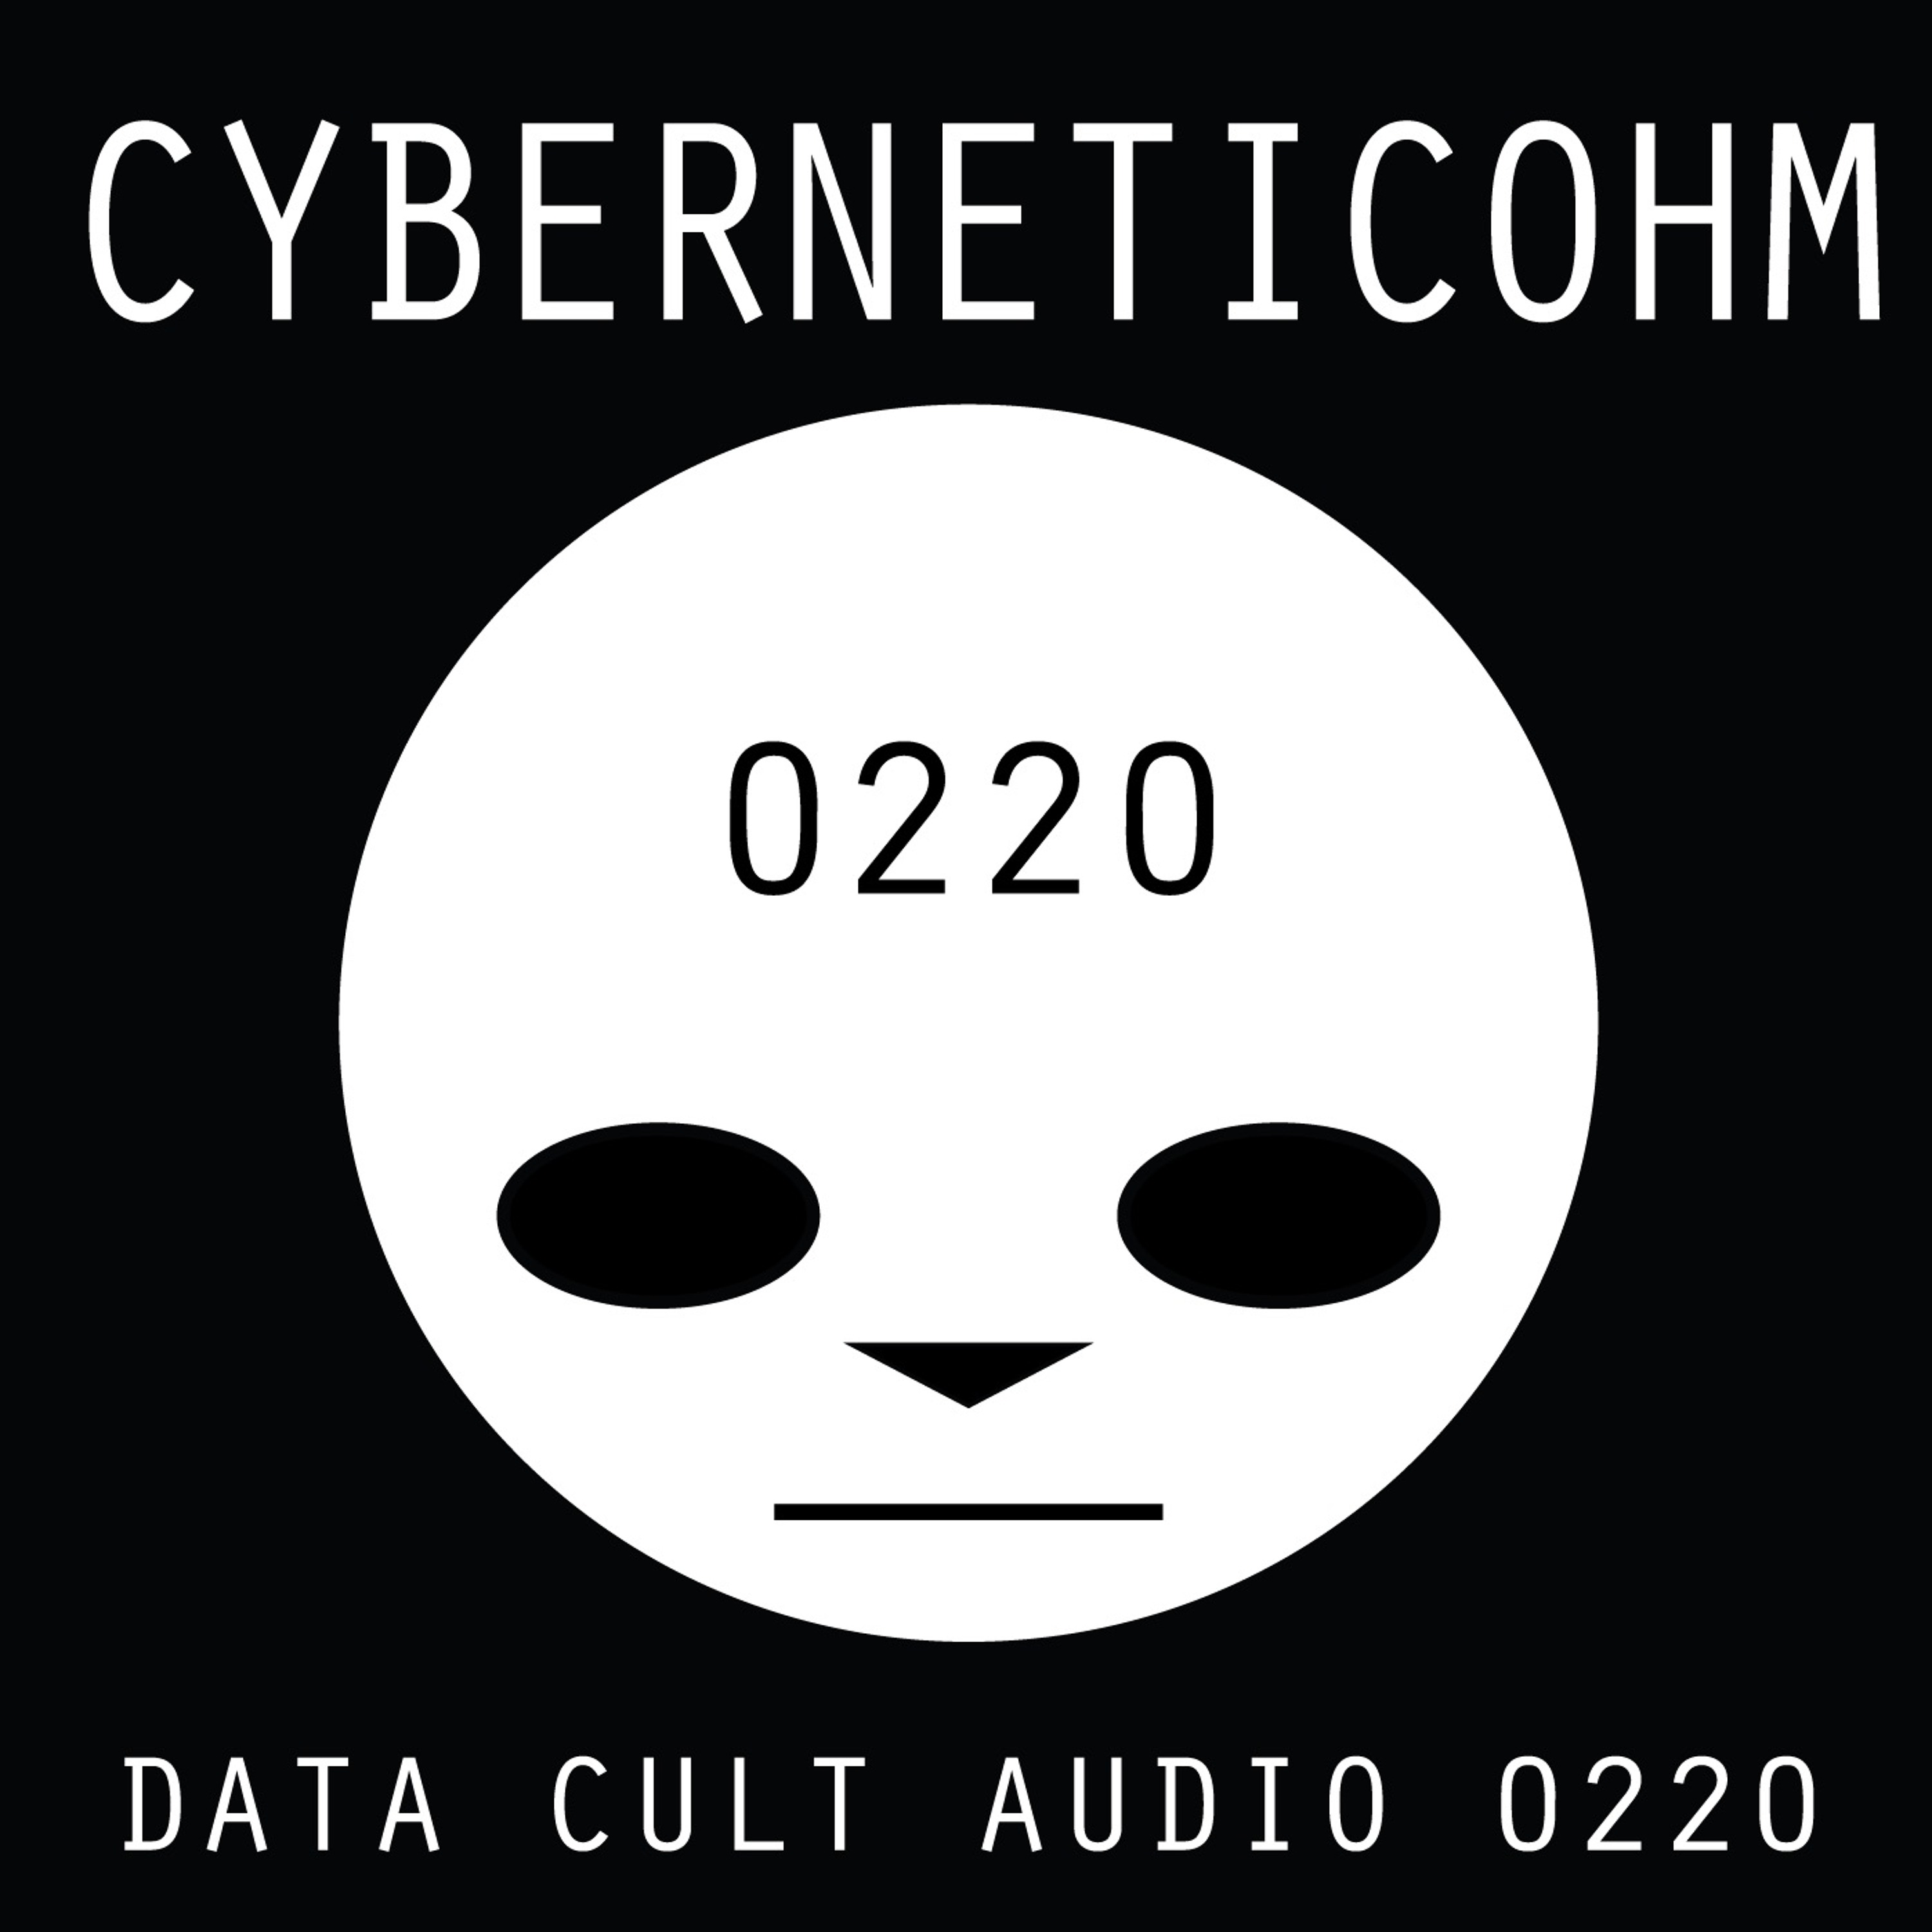 Data Cult Audio 0220 - CyberneticOhm